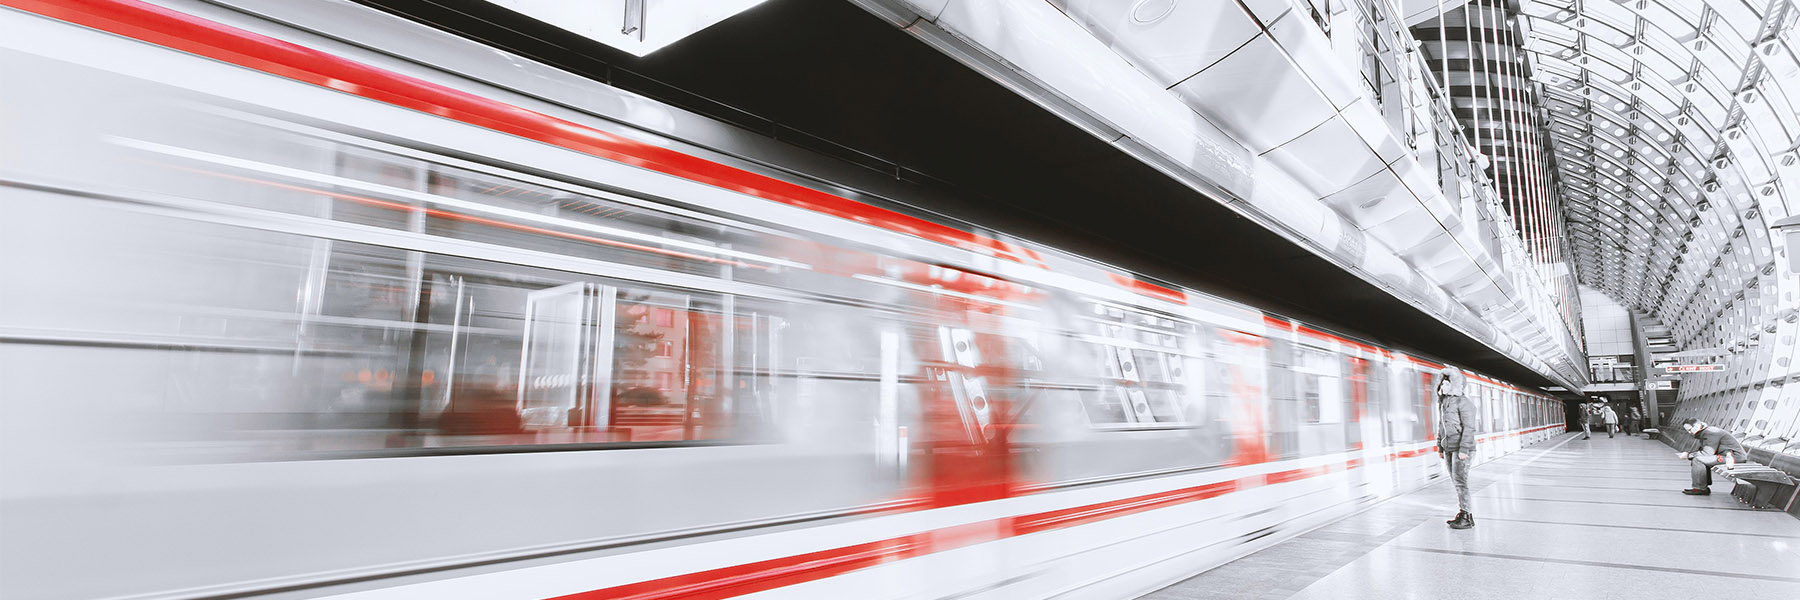 blurred image of subway passing through station terminal